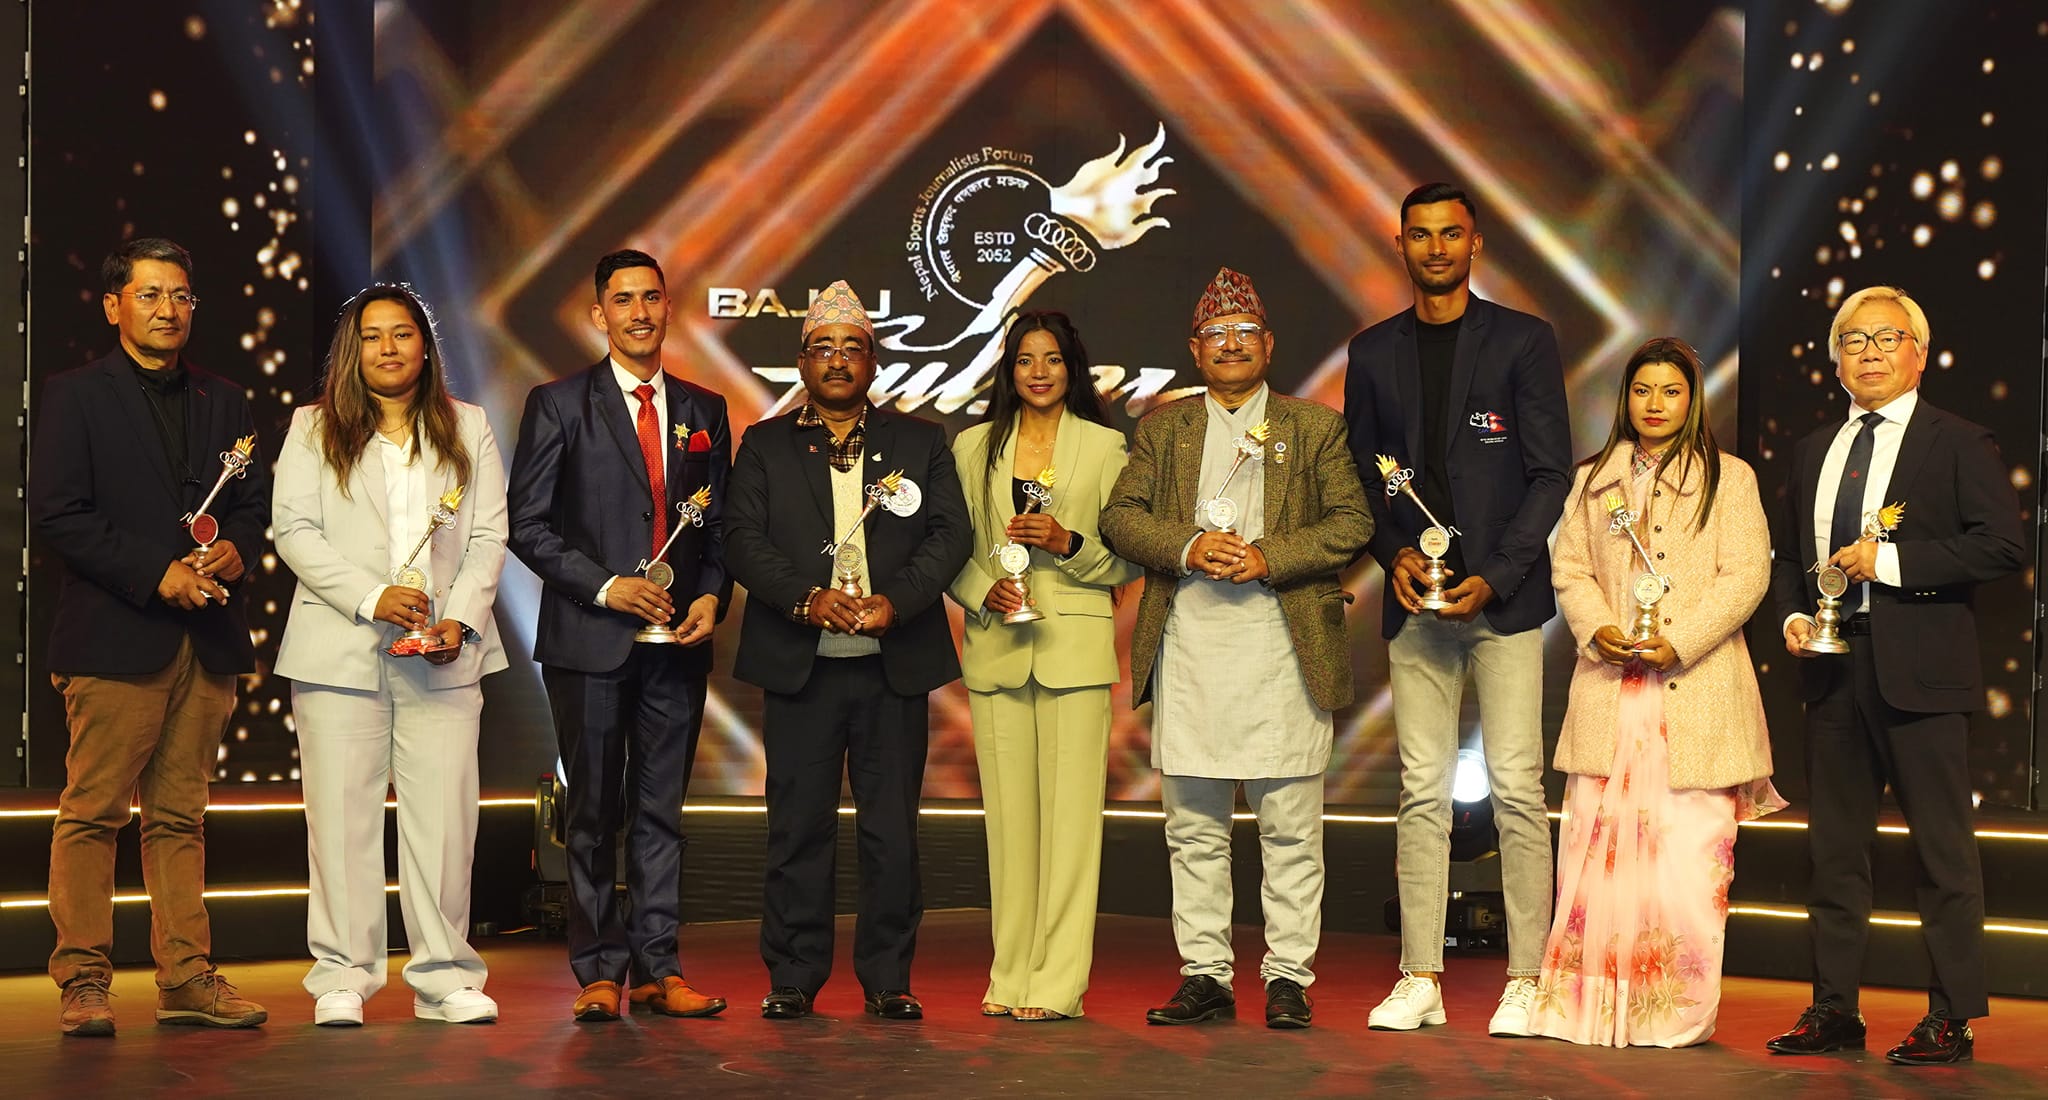 NSJF Pulsar Sports Award: Athletics steal the show with Deepak Adhikari and Rajpura Pachhai winning Best Athlete awards